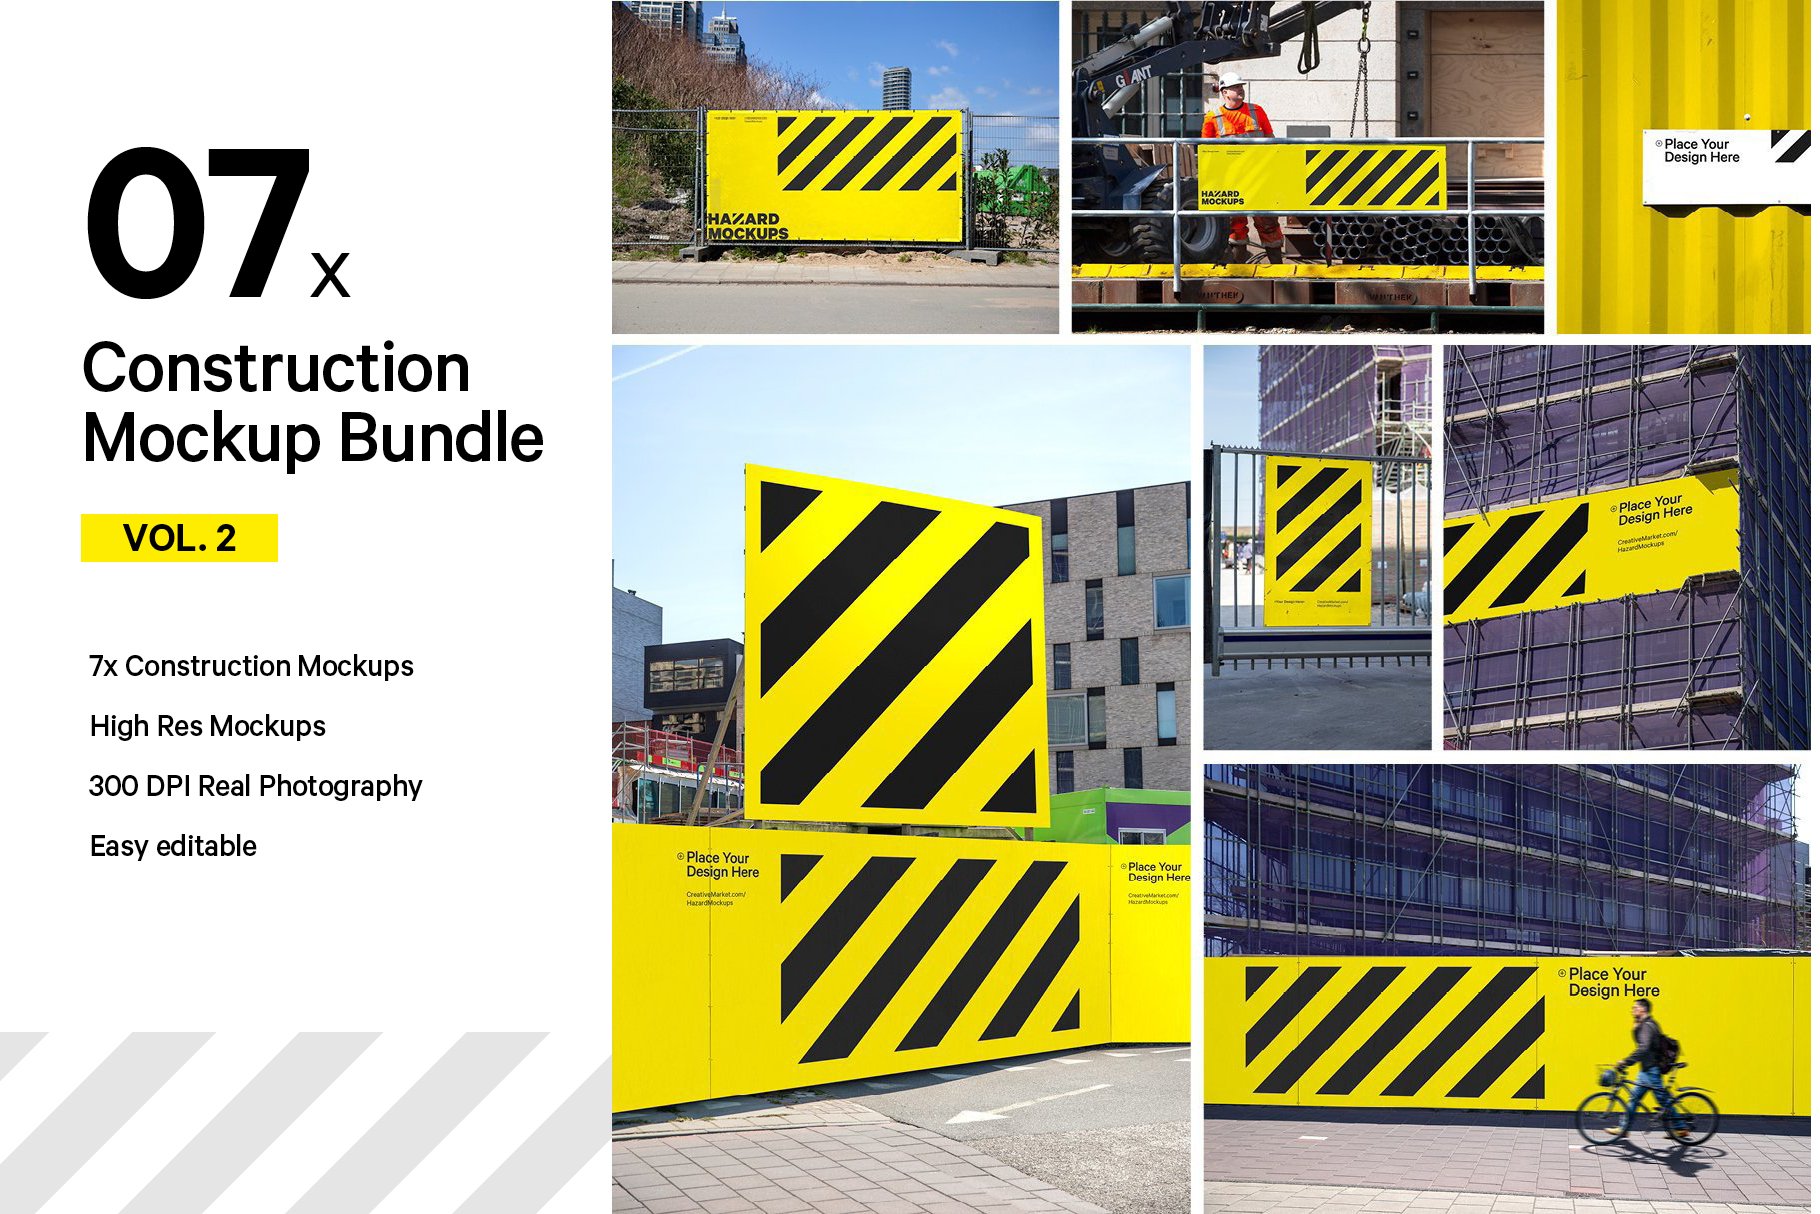 7x Construction Mockup Bundle Vol.2 cover image.